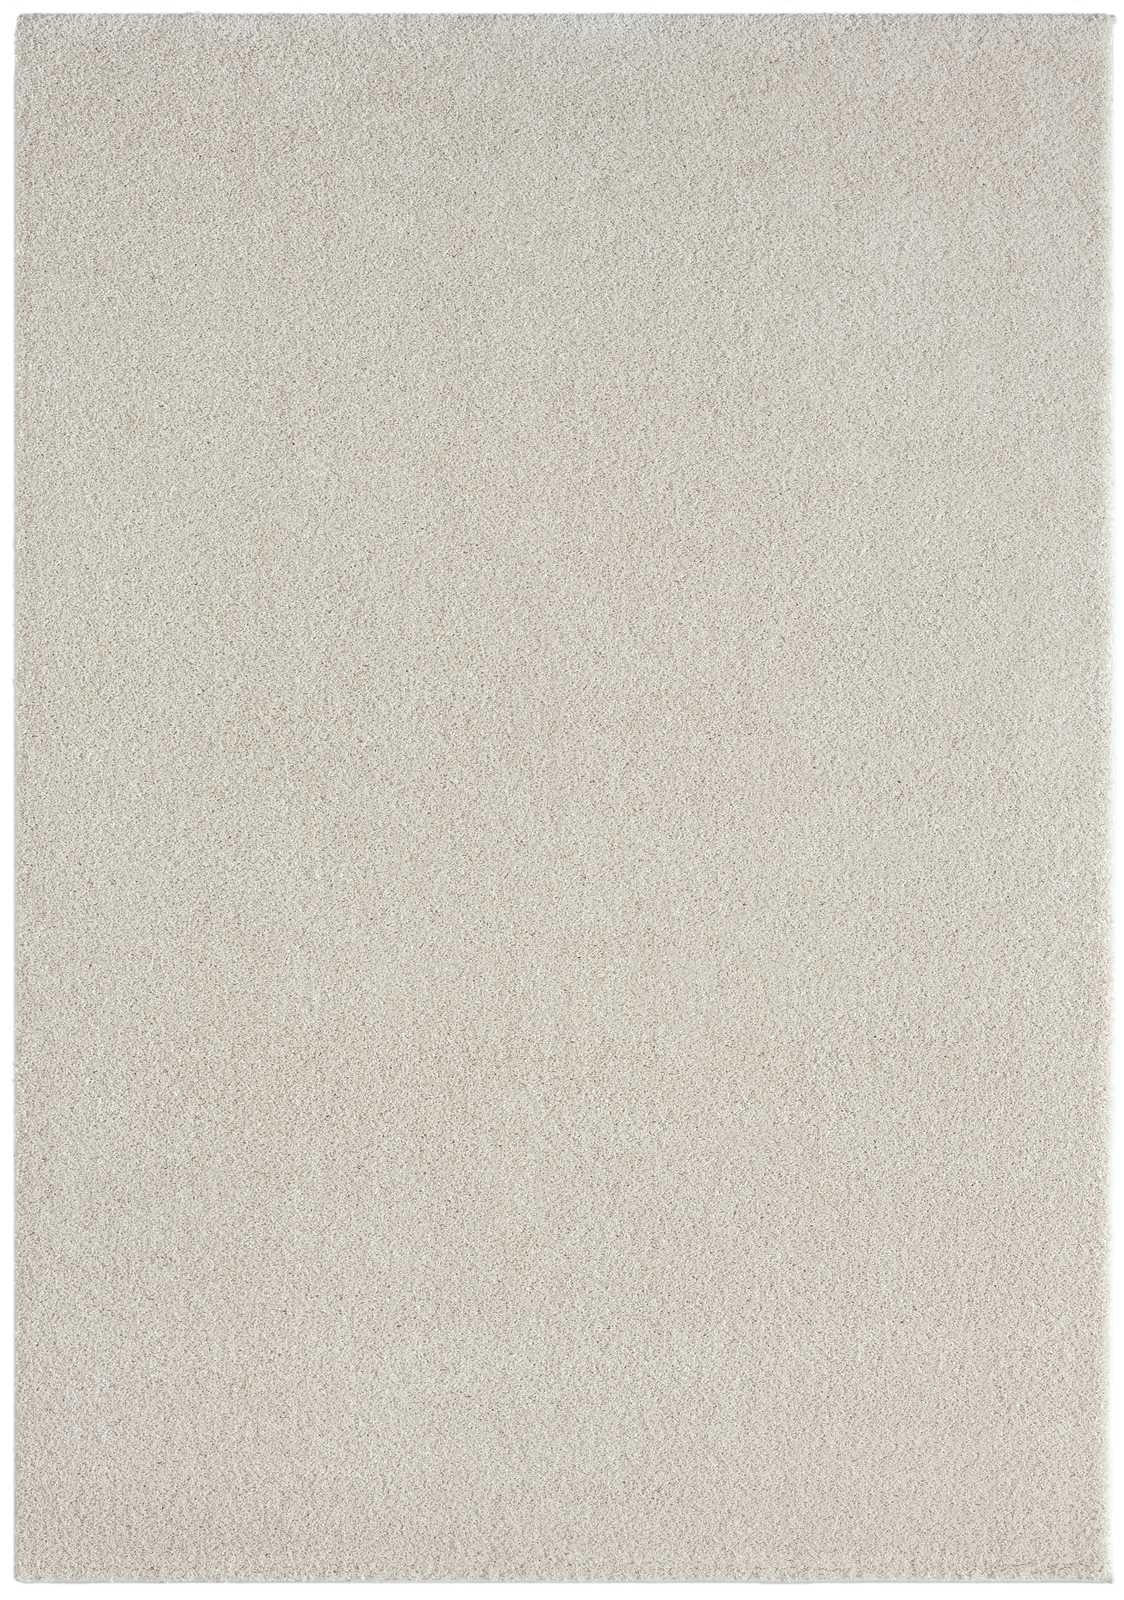             Crème kortpolig vloerkleed - 170 x 120 cm
        